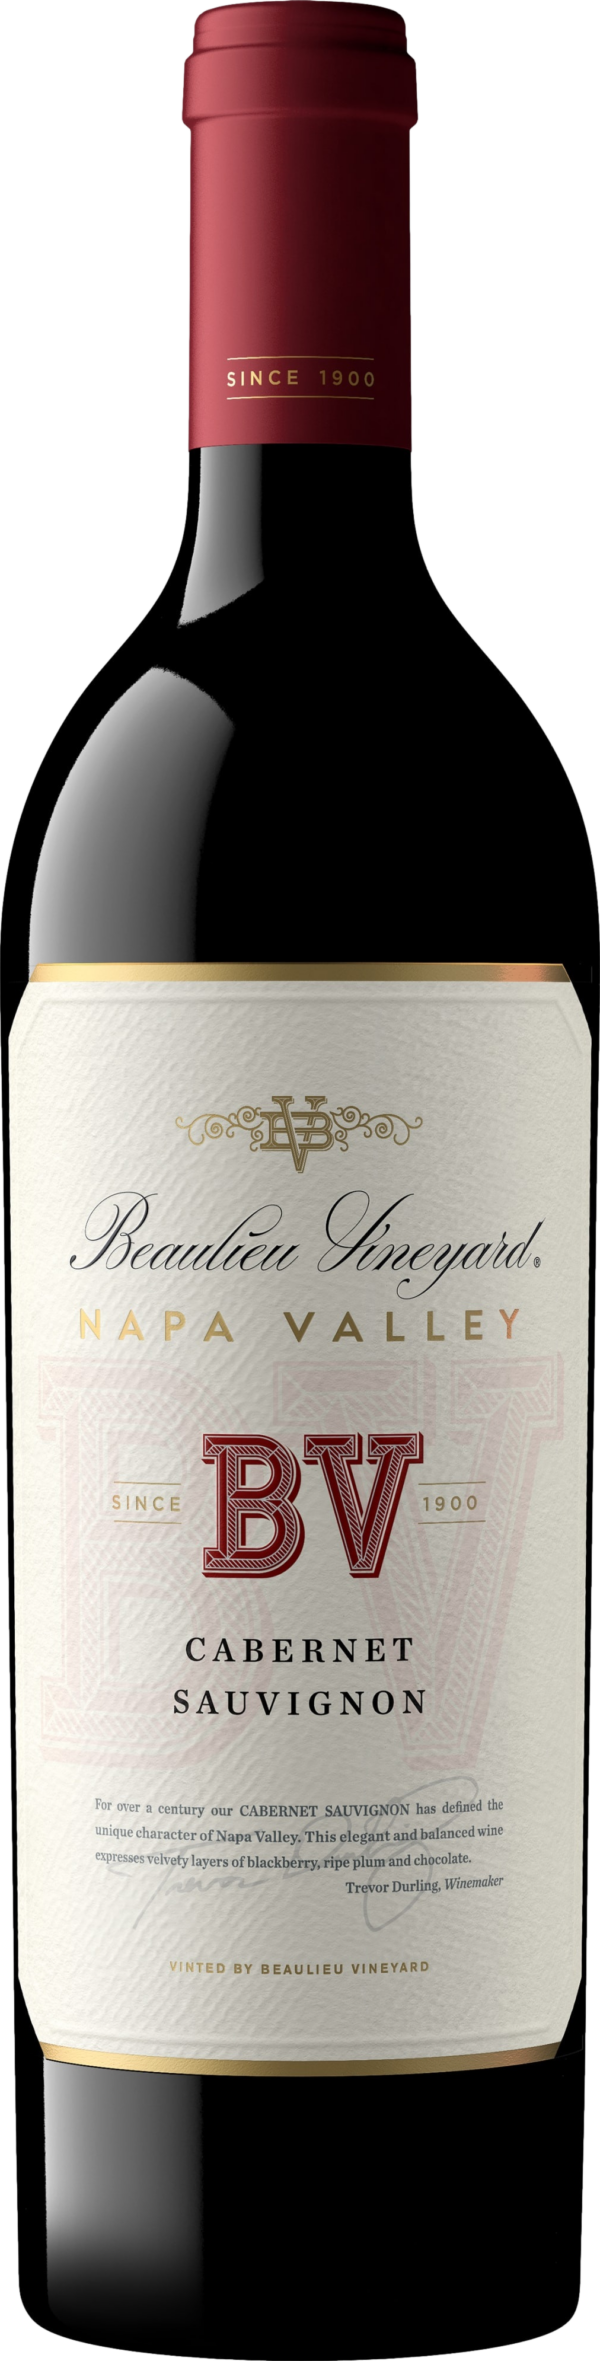 Product image of Beaulieu Vineyard Napa Valley Cabernet Sauvignon 2018 from 8wines